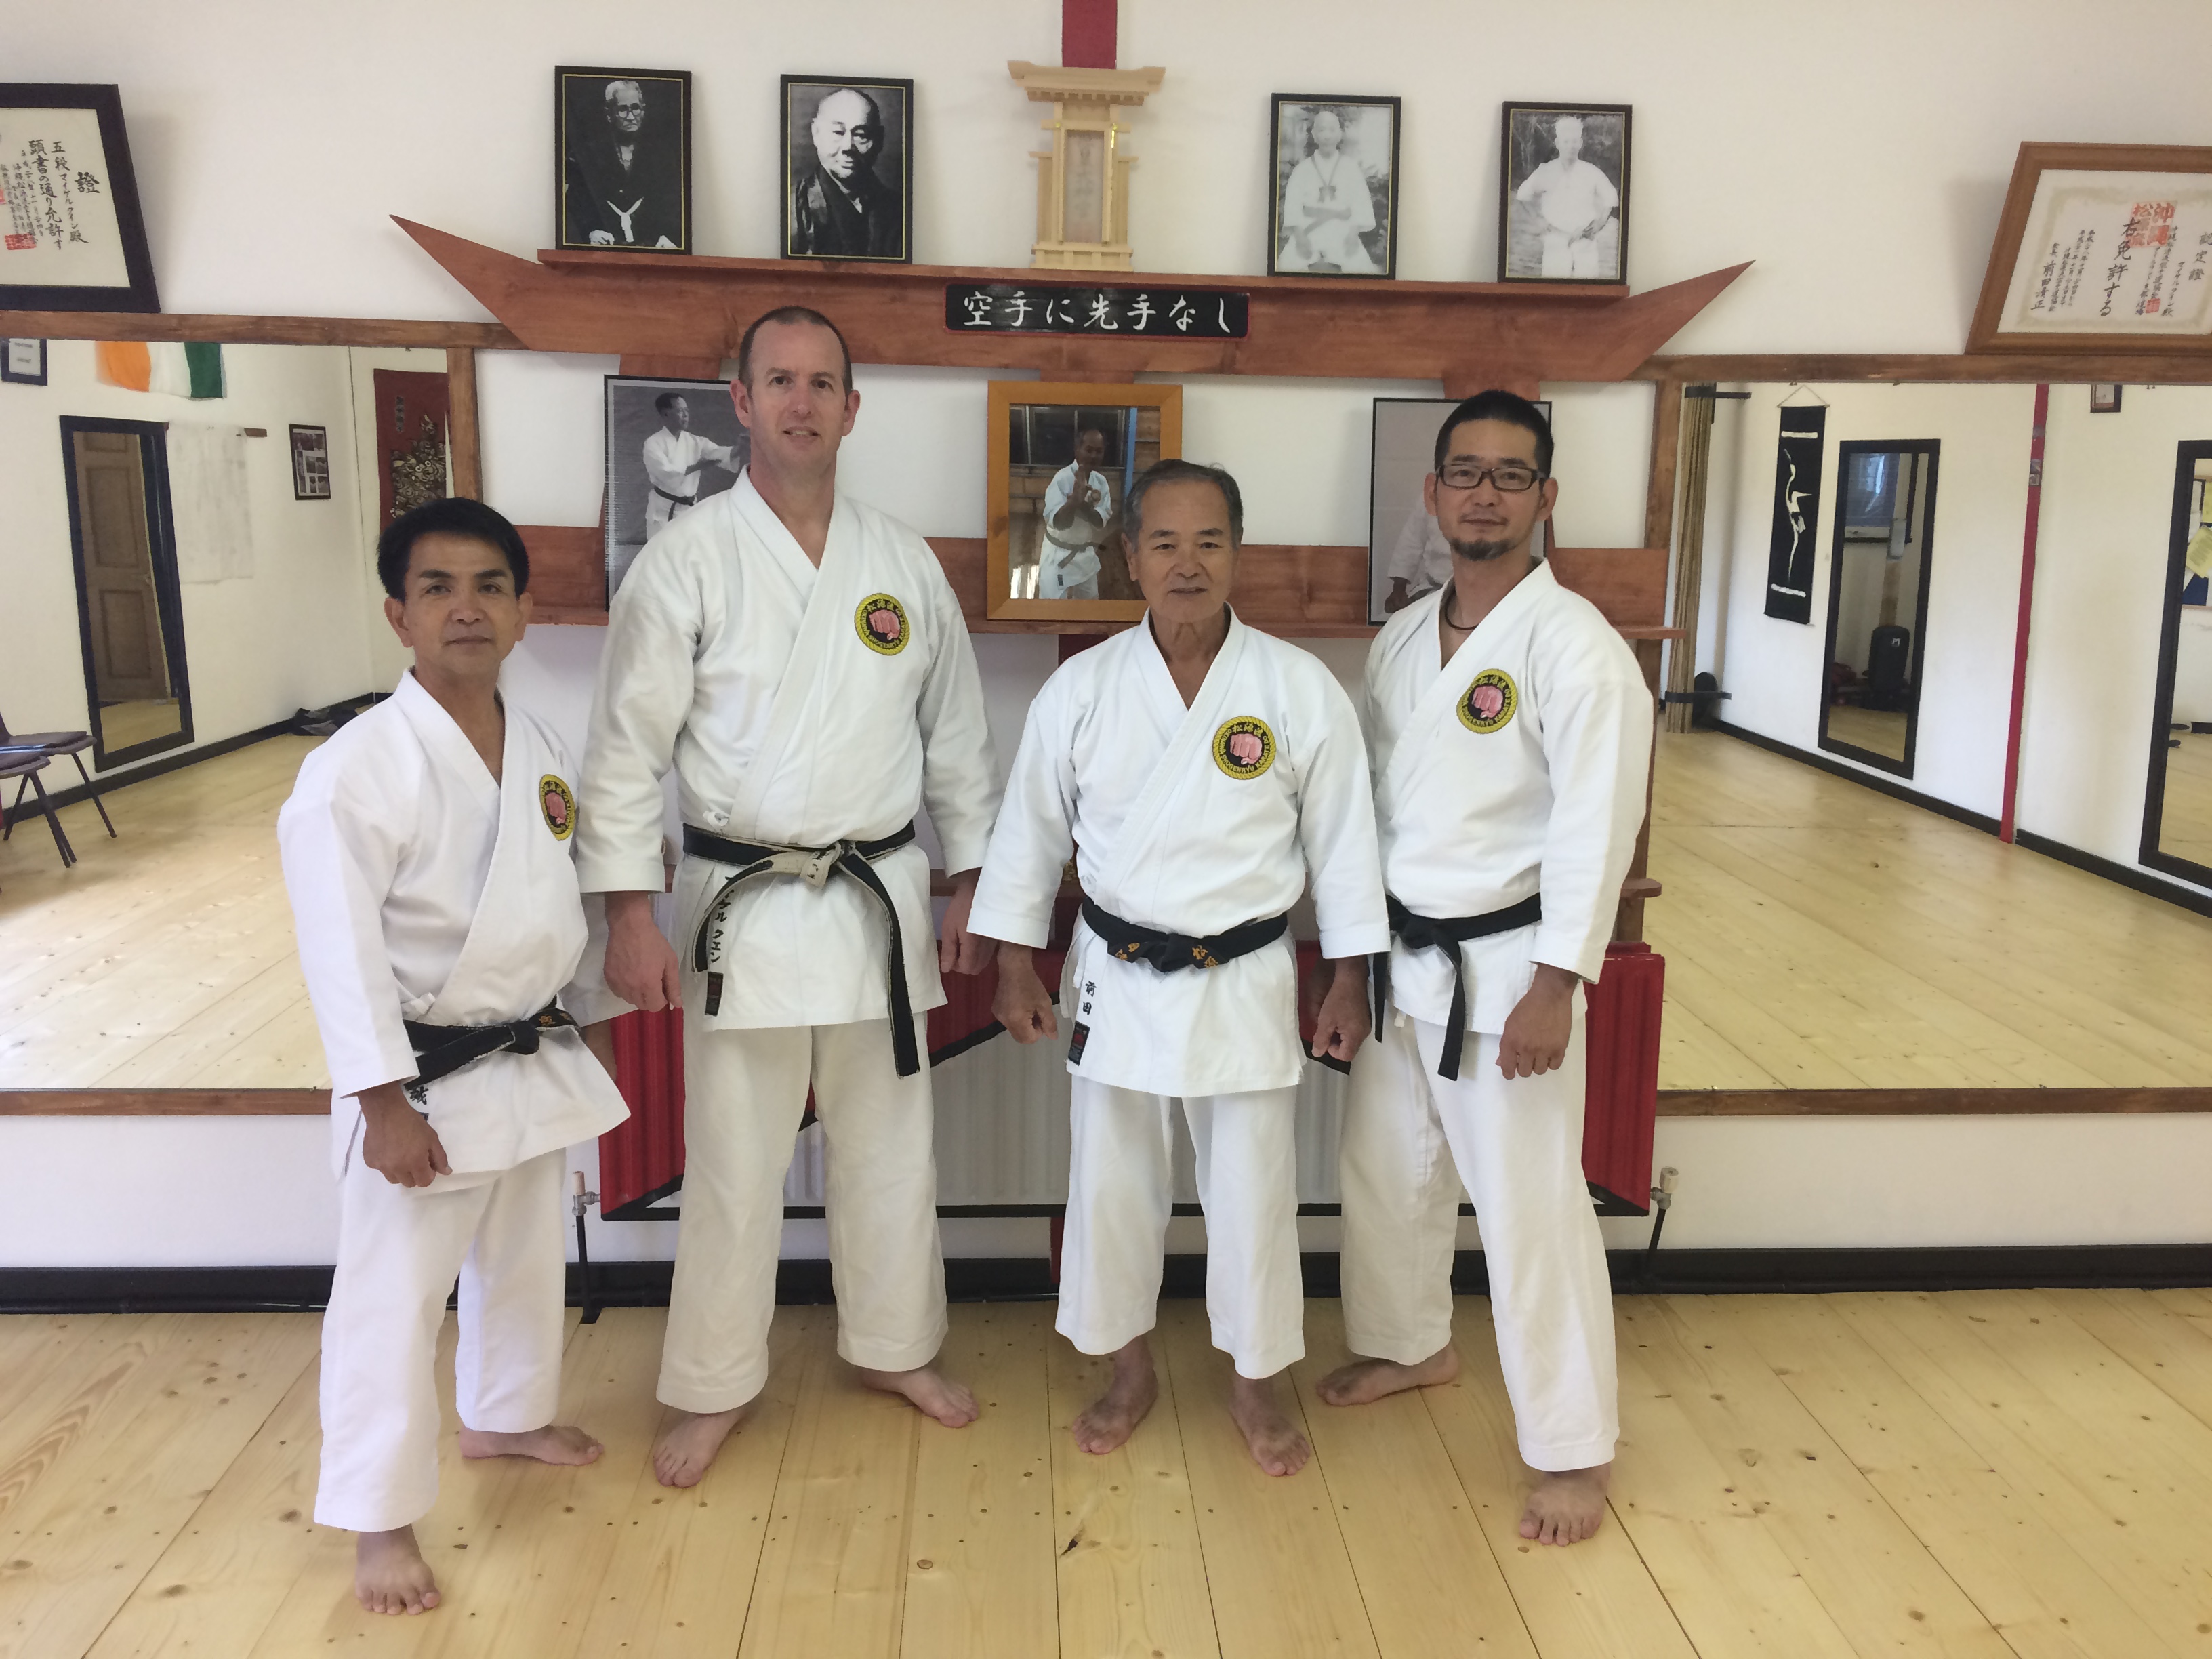 World-renowned karate teacher hosts successful seminar in Donegal